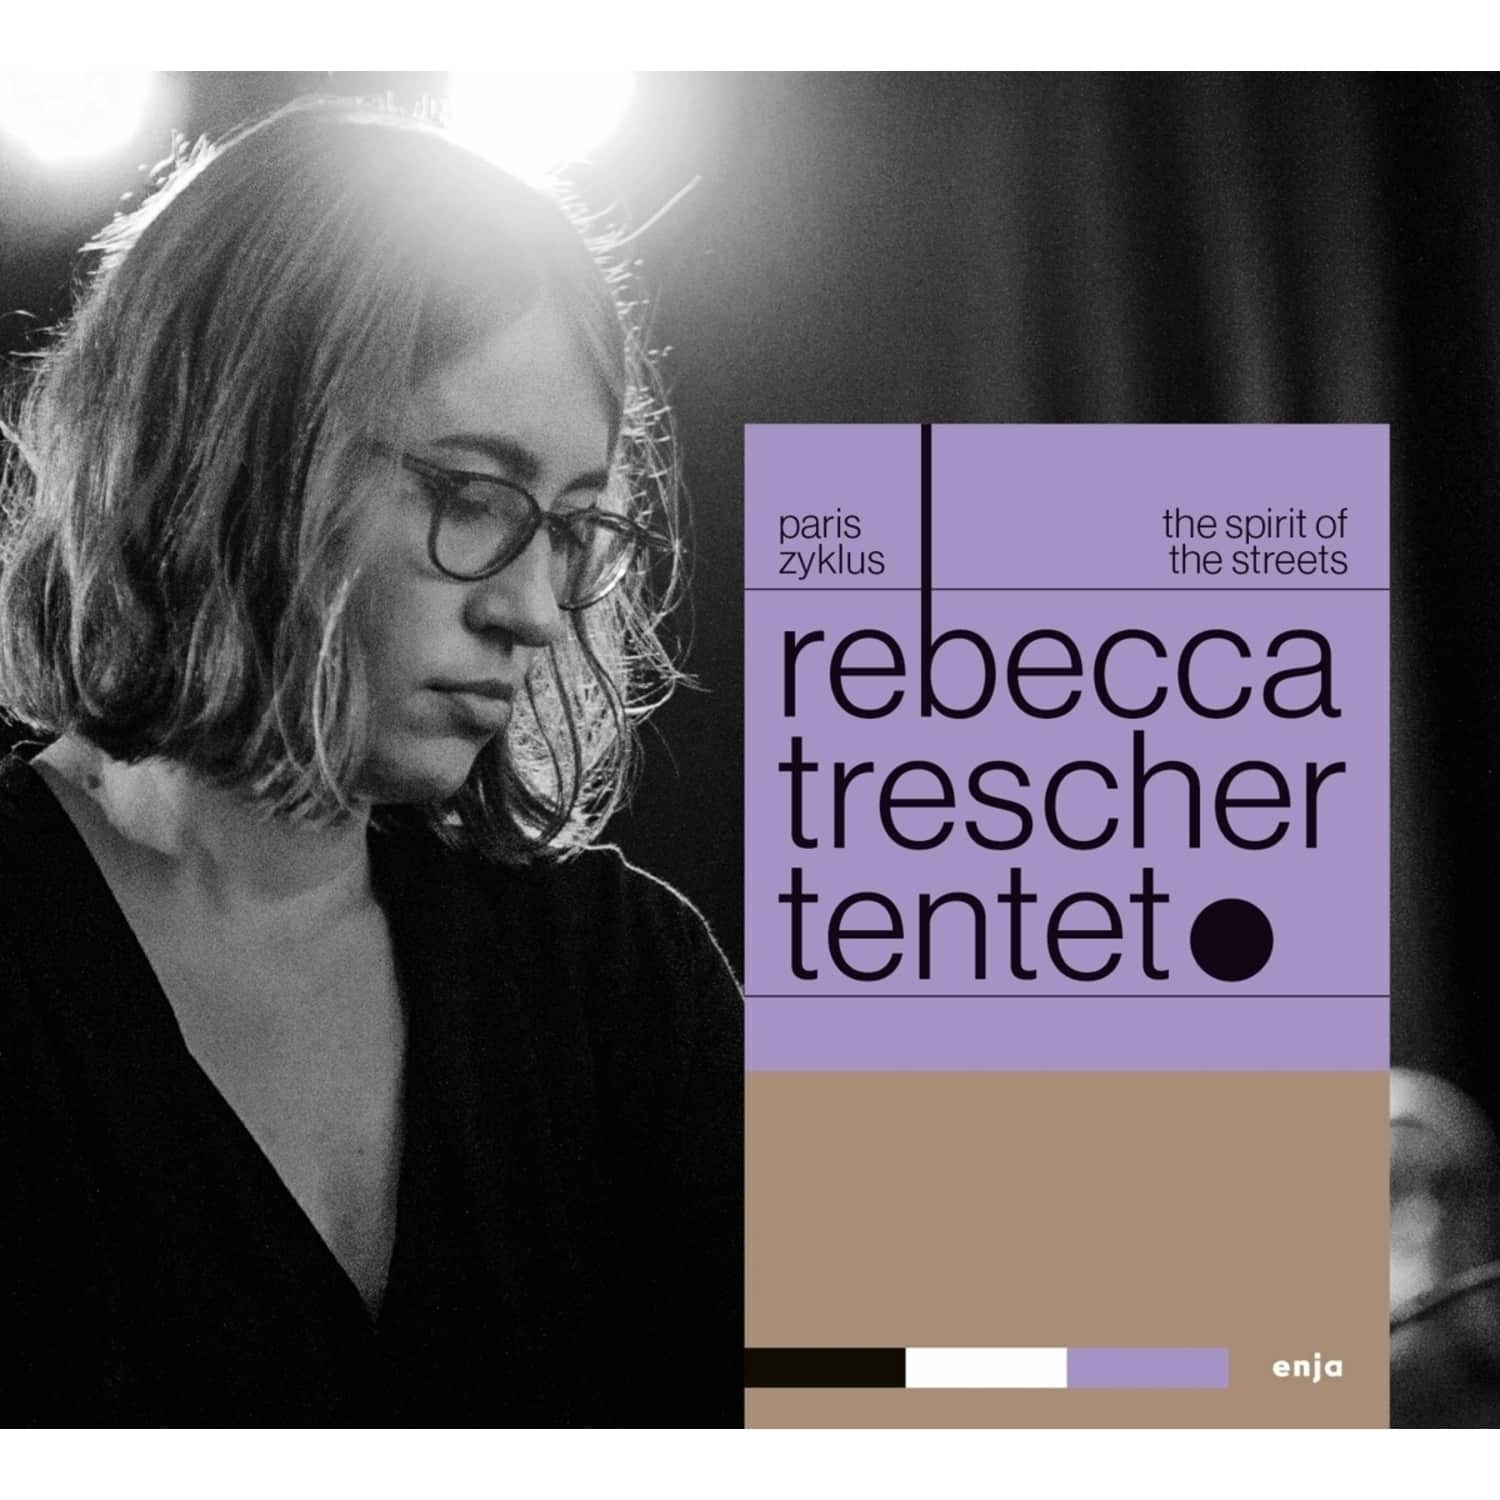 Rebecca Tentet Trescher - PARIS ZYKLUS 